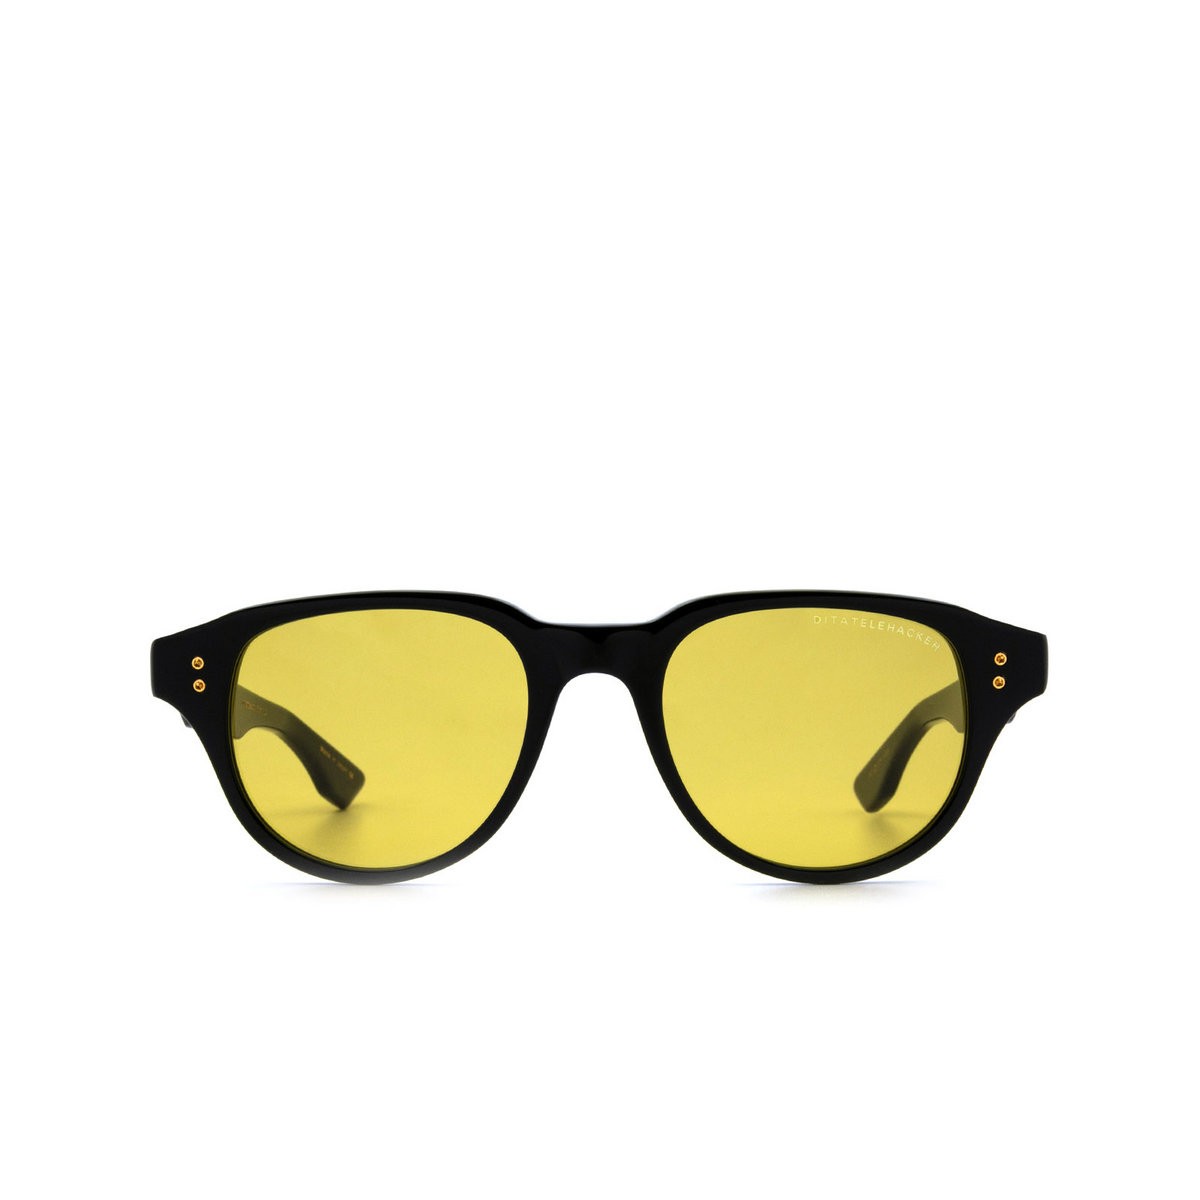 Dita TELEHACKER Sunglasses BLK-GLD Black Gold - front view